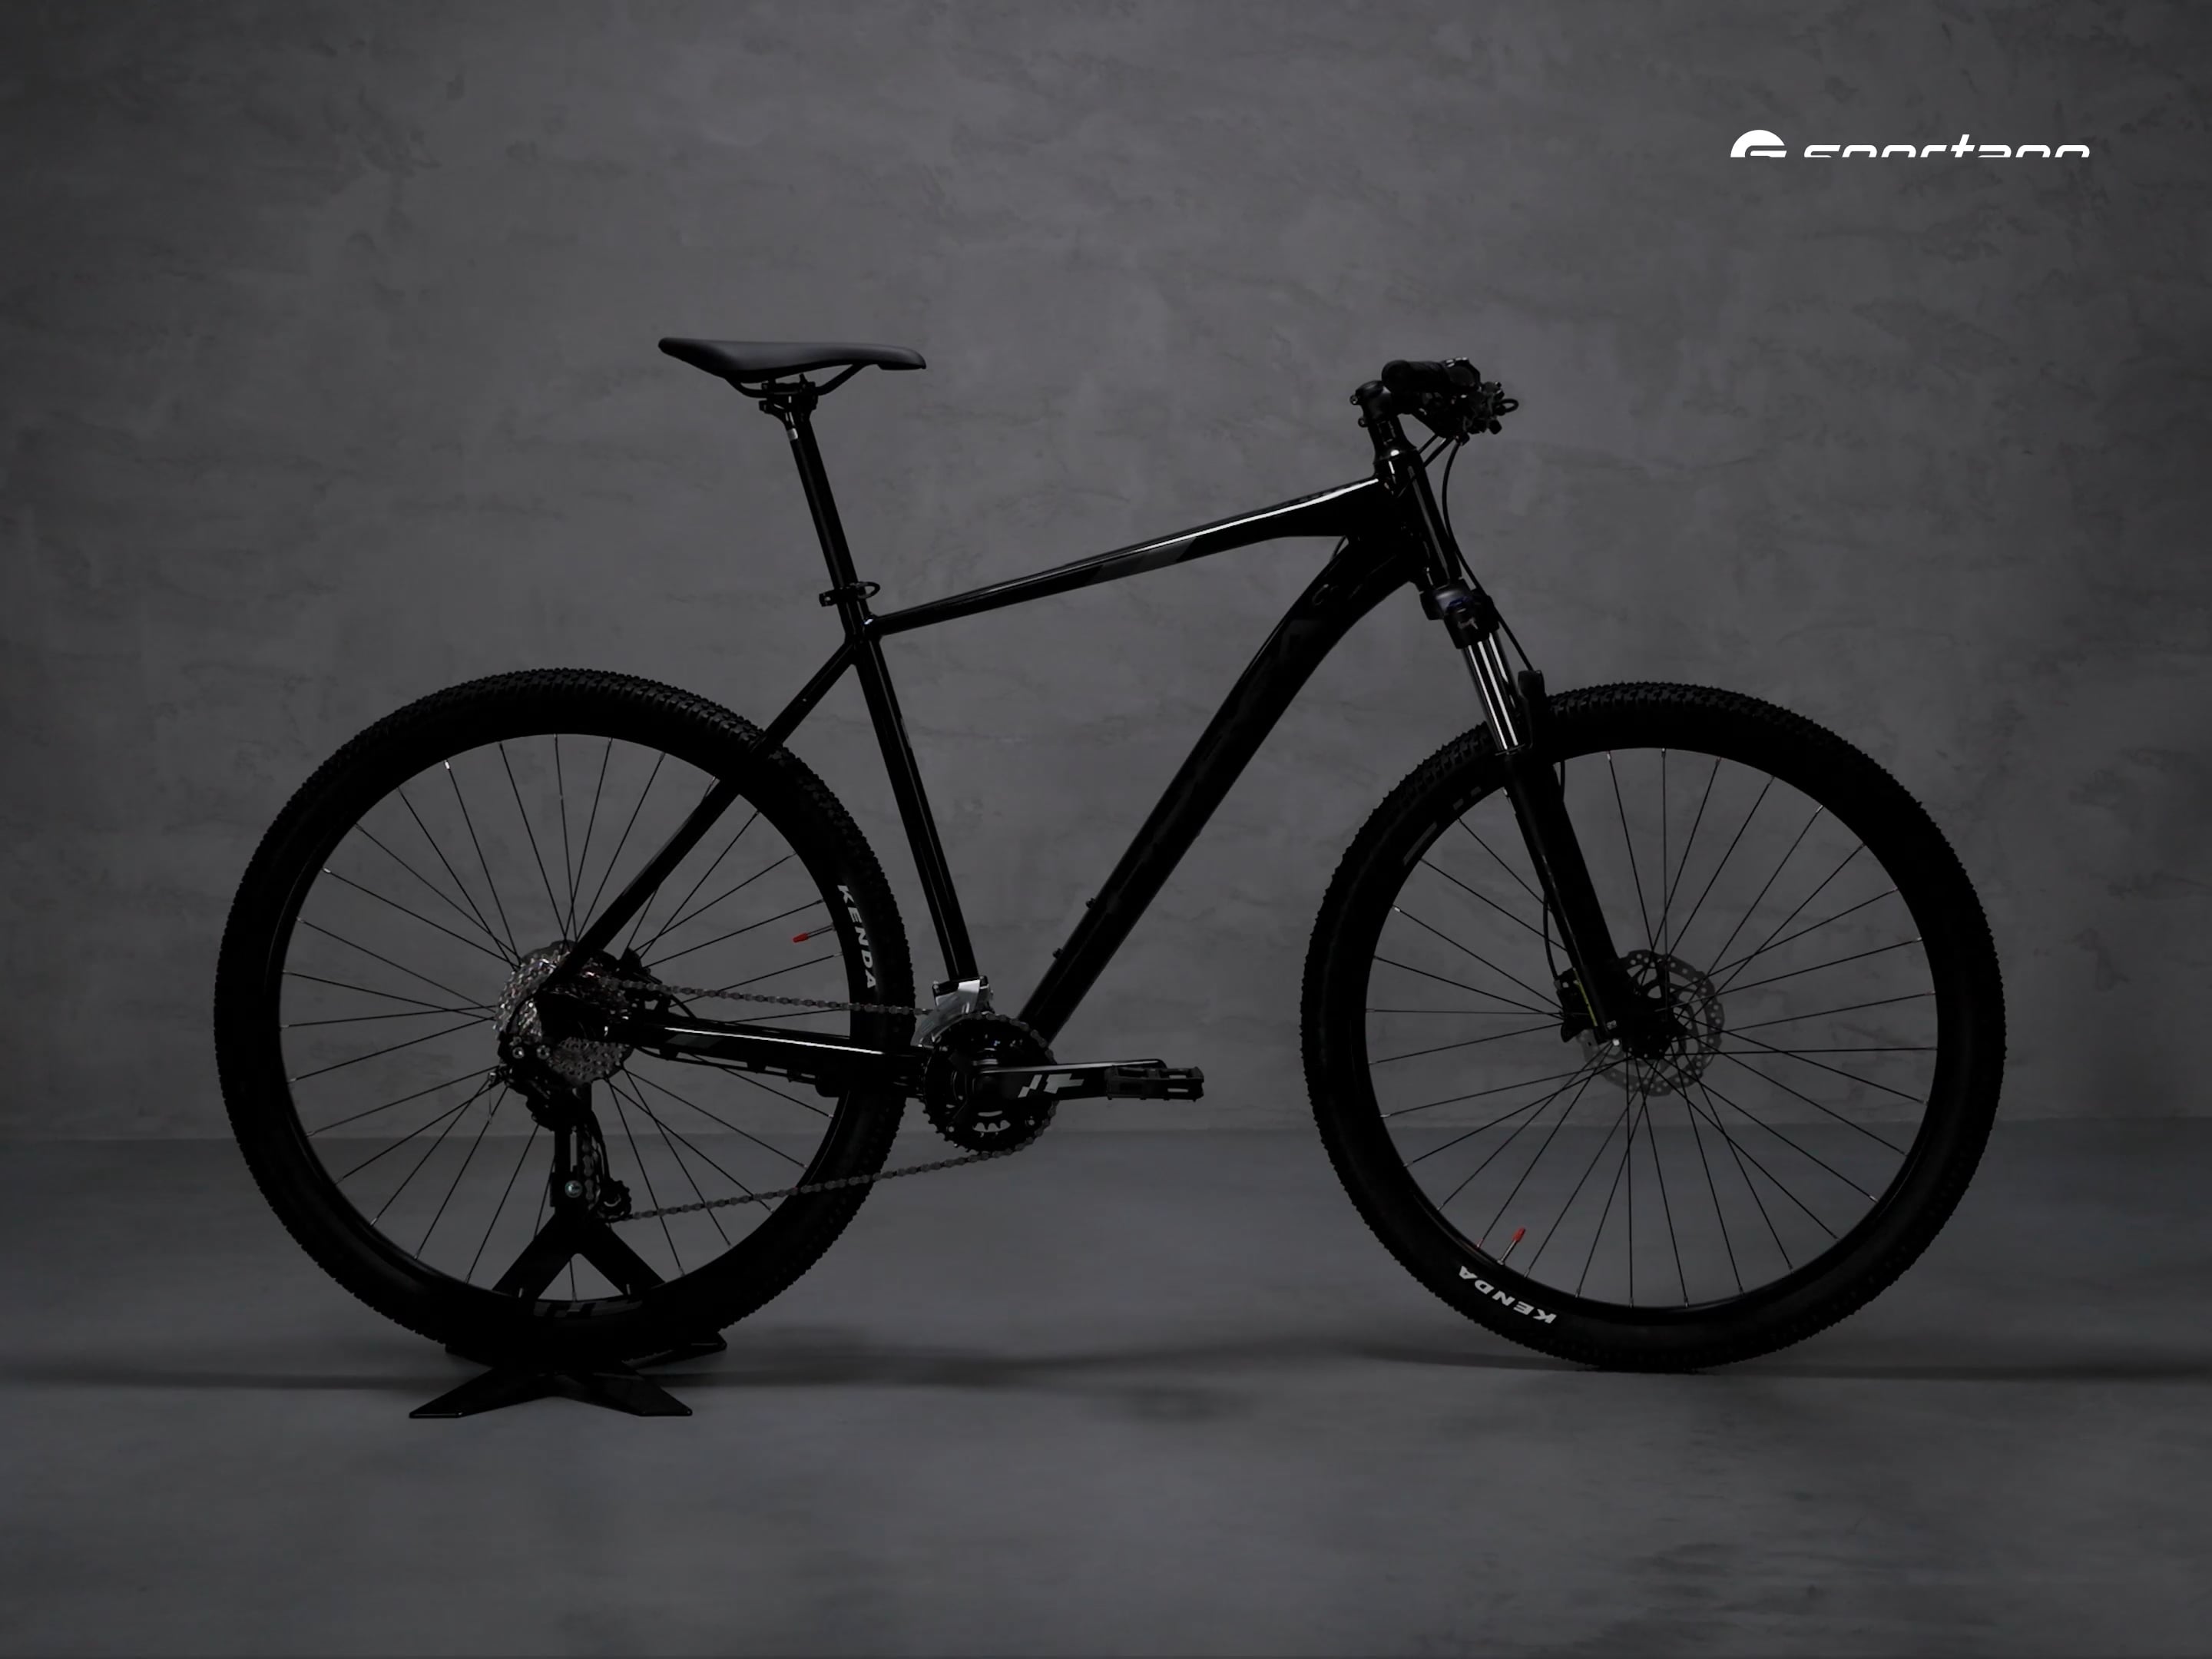 Orbea MX 27 50 mountain bike black